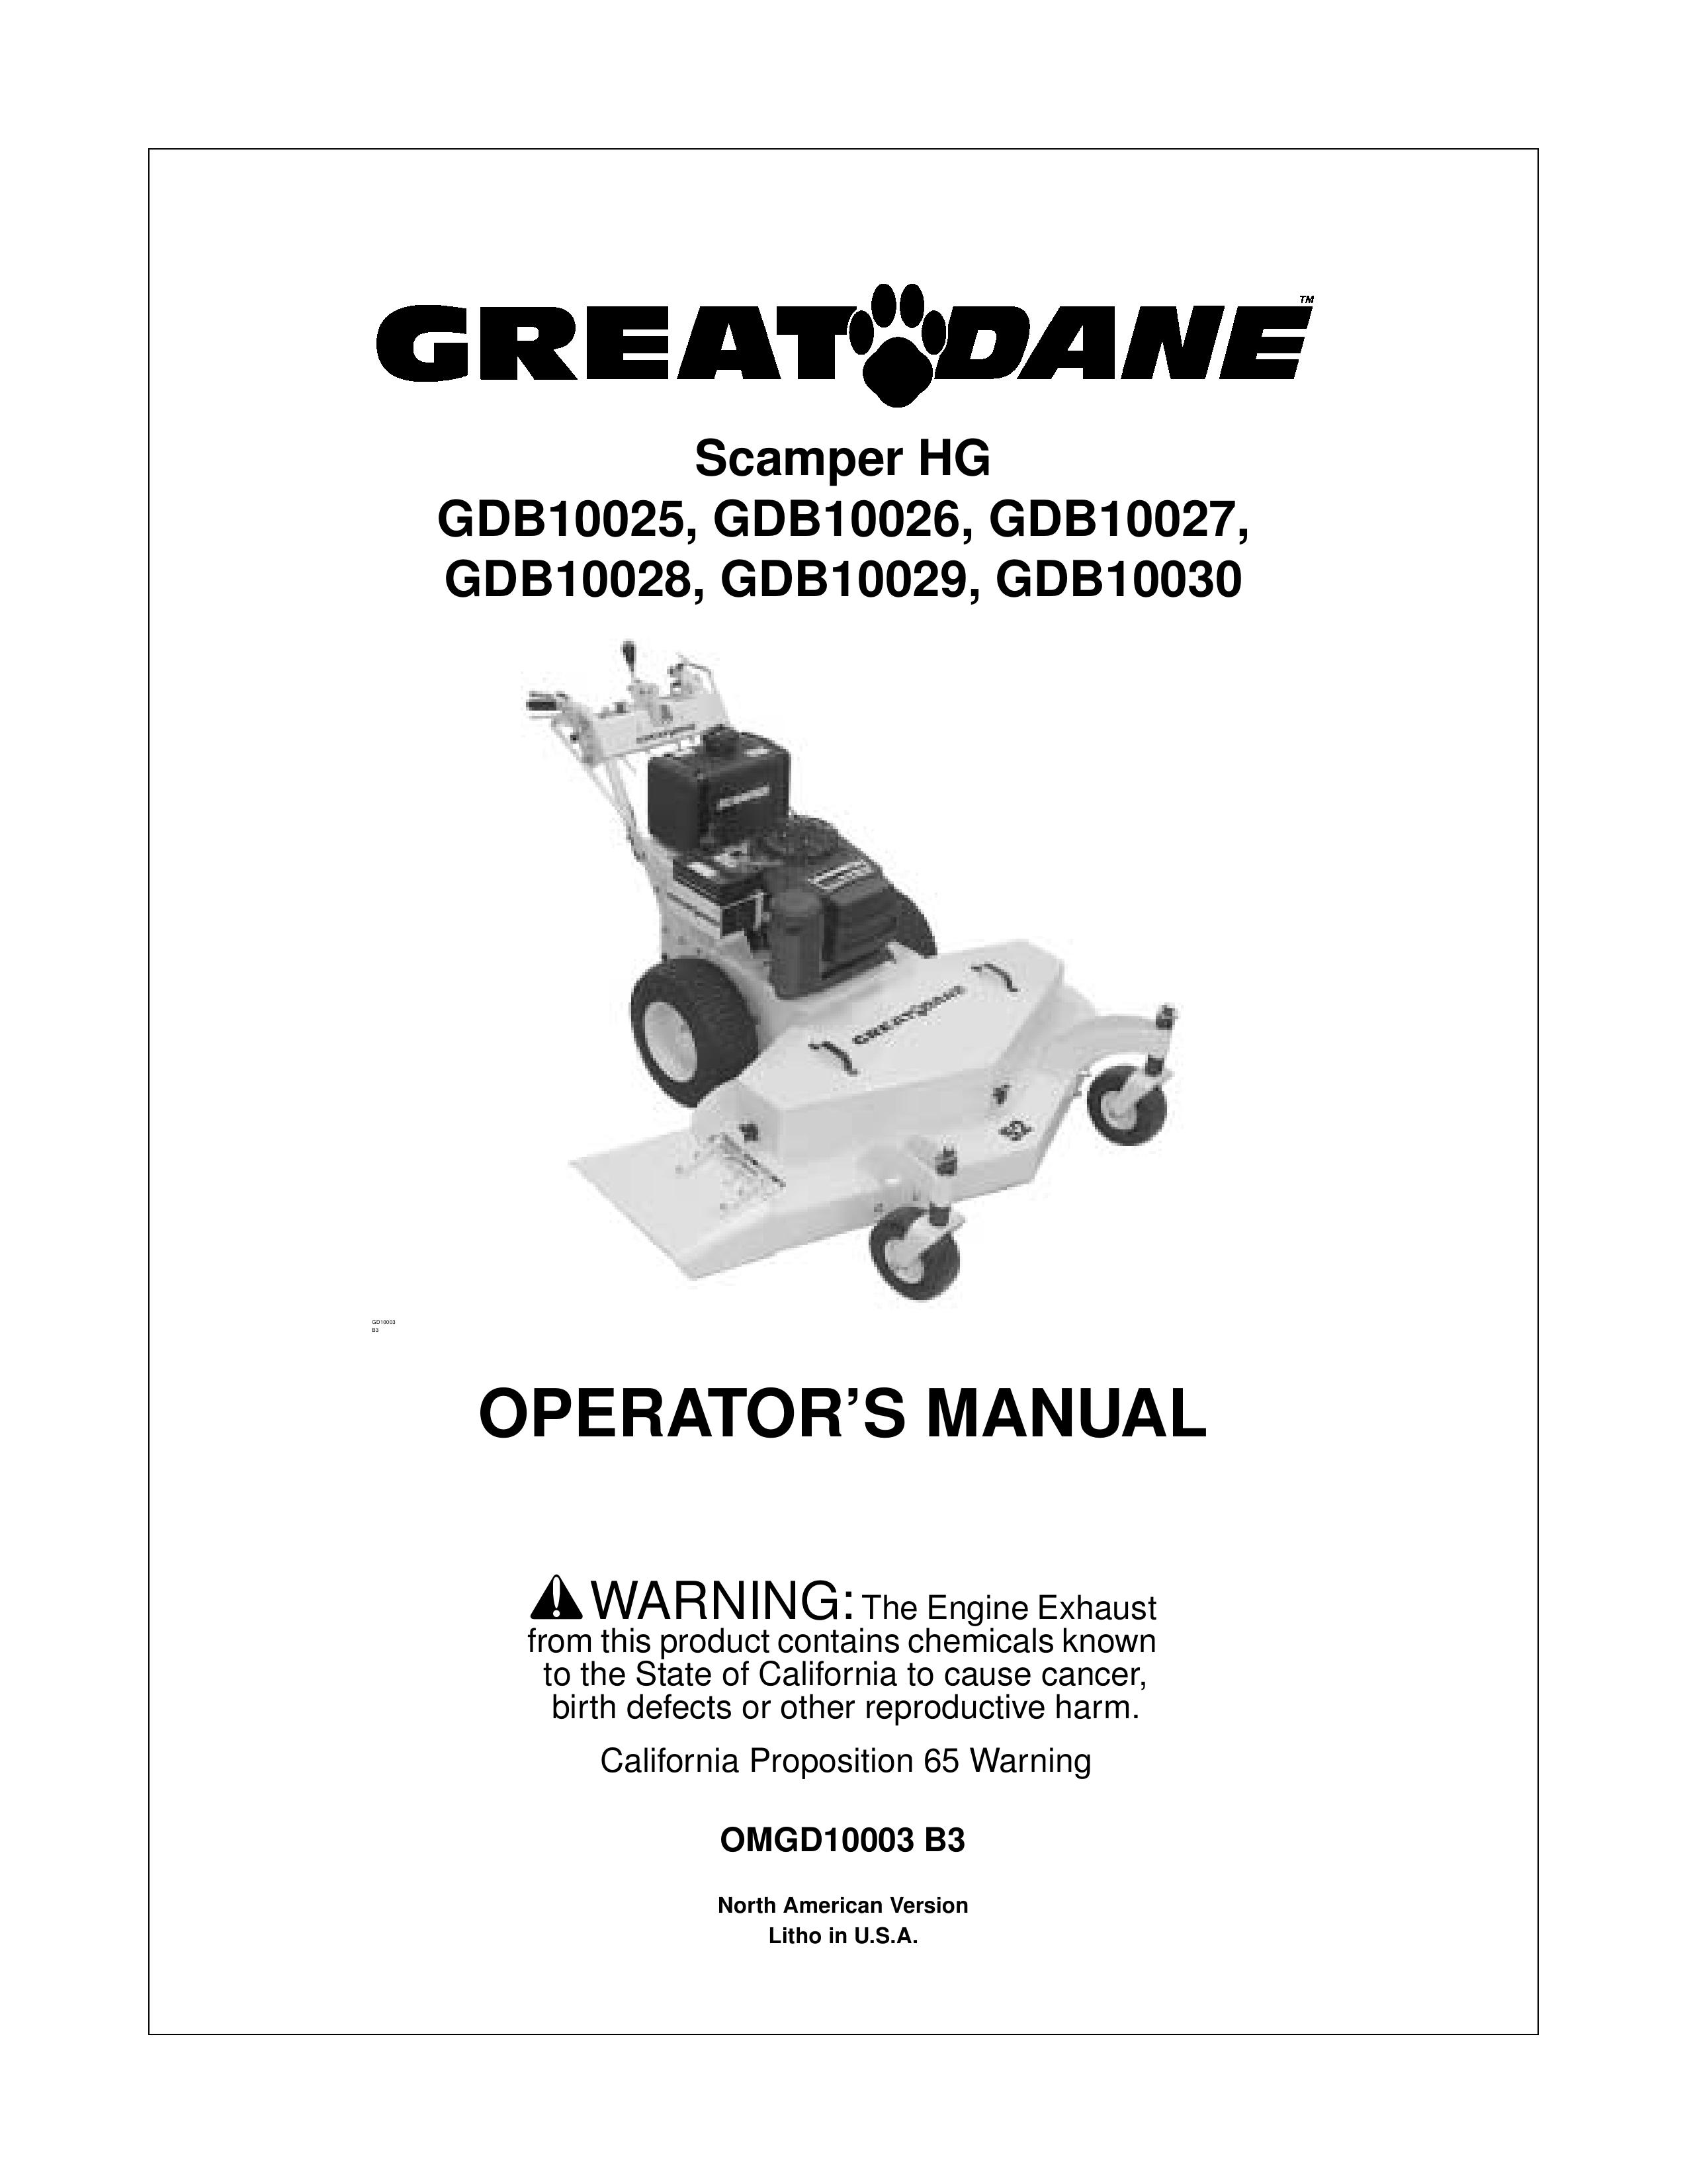 Great Dane GDB10027 Lawn Mower User Manual